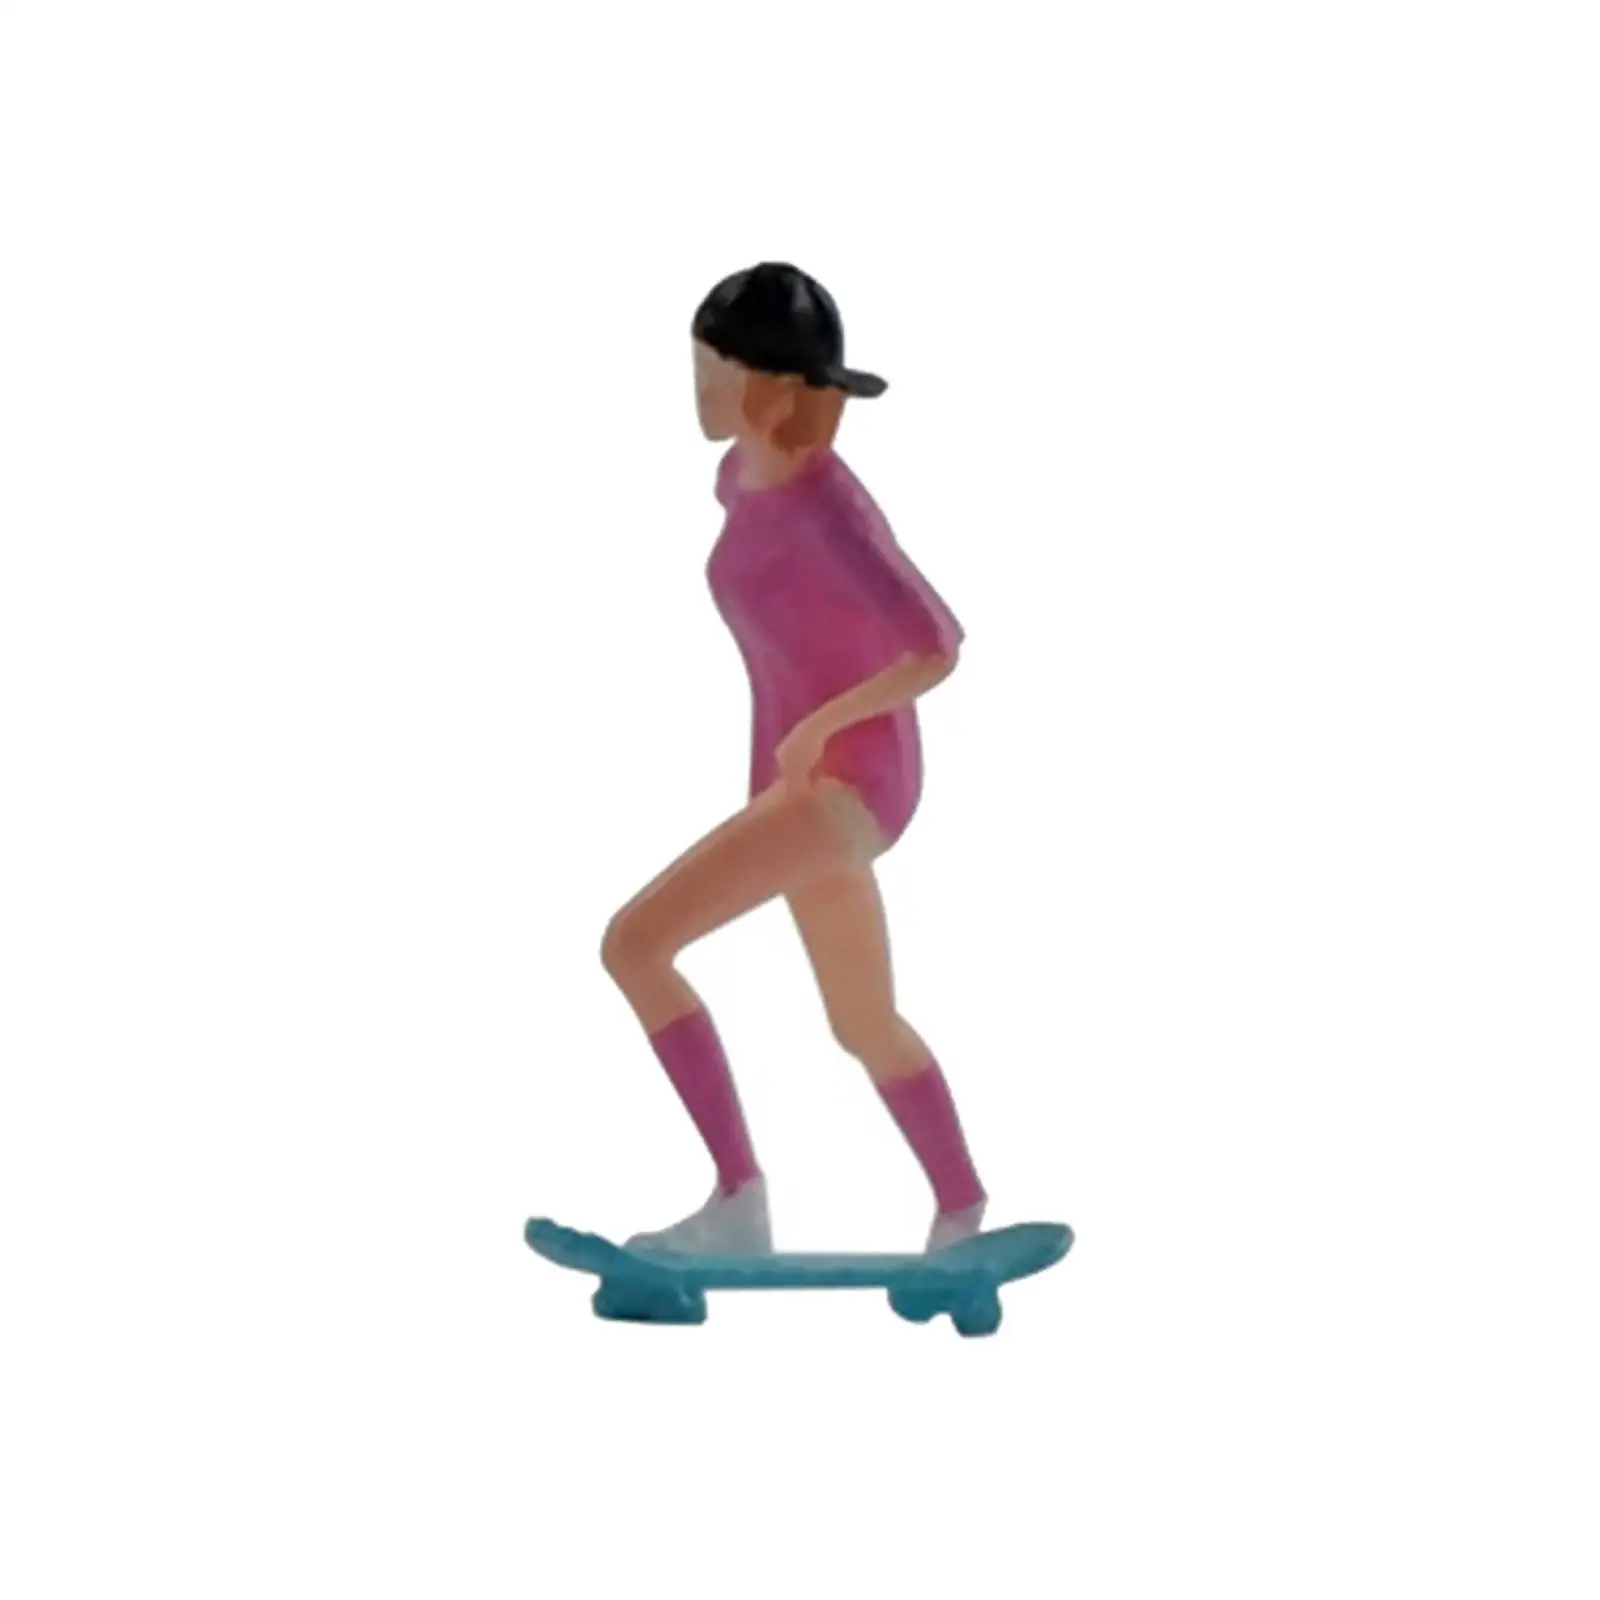 Realistic 1:64 Scale Figures Skateboard Girl Miniature Scenes People for Diorama